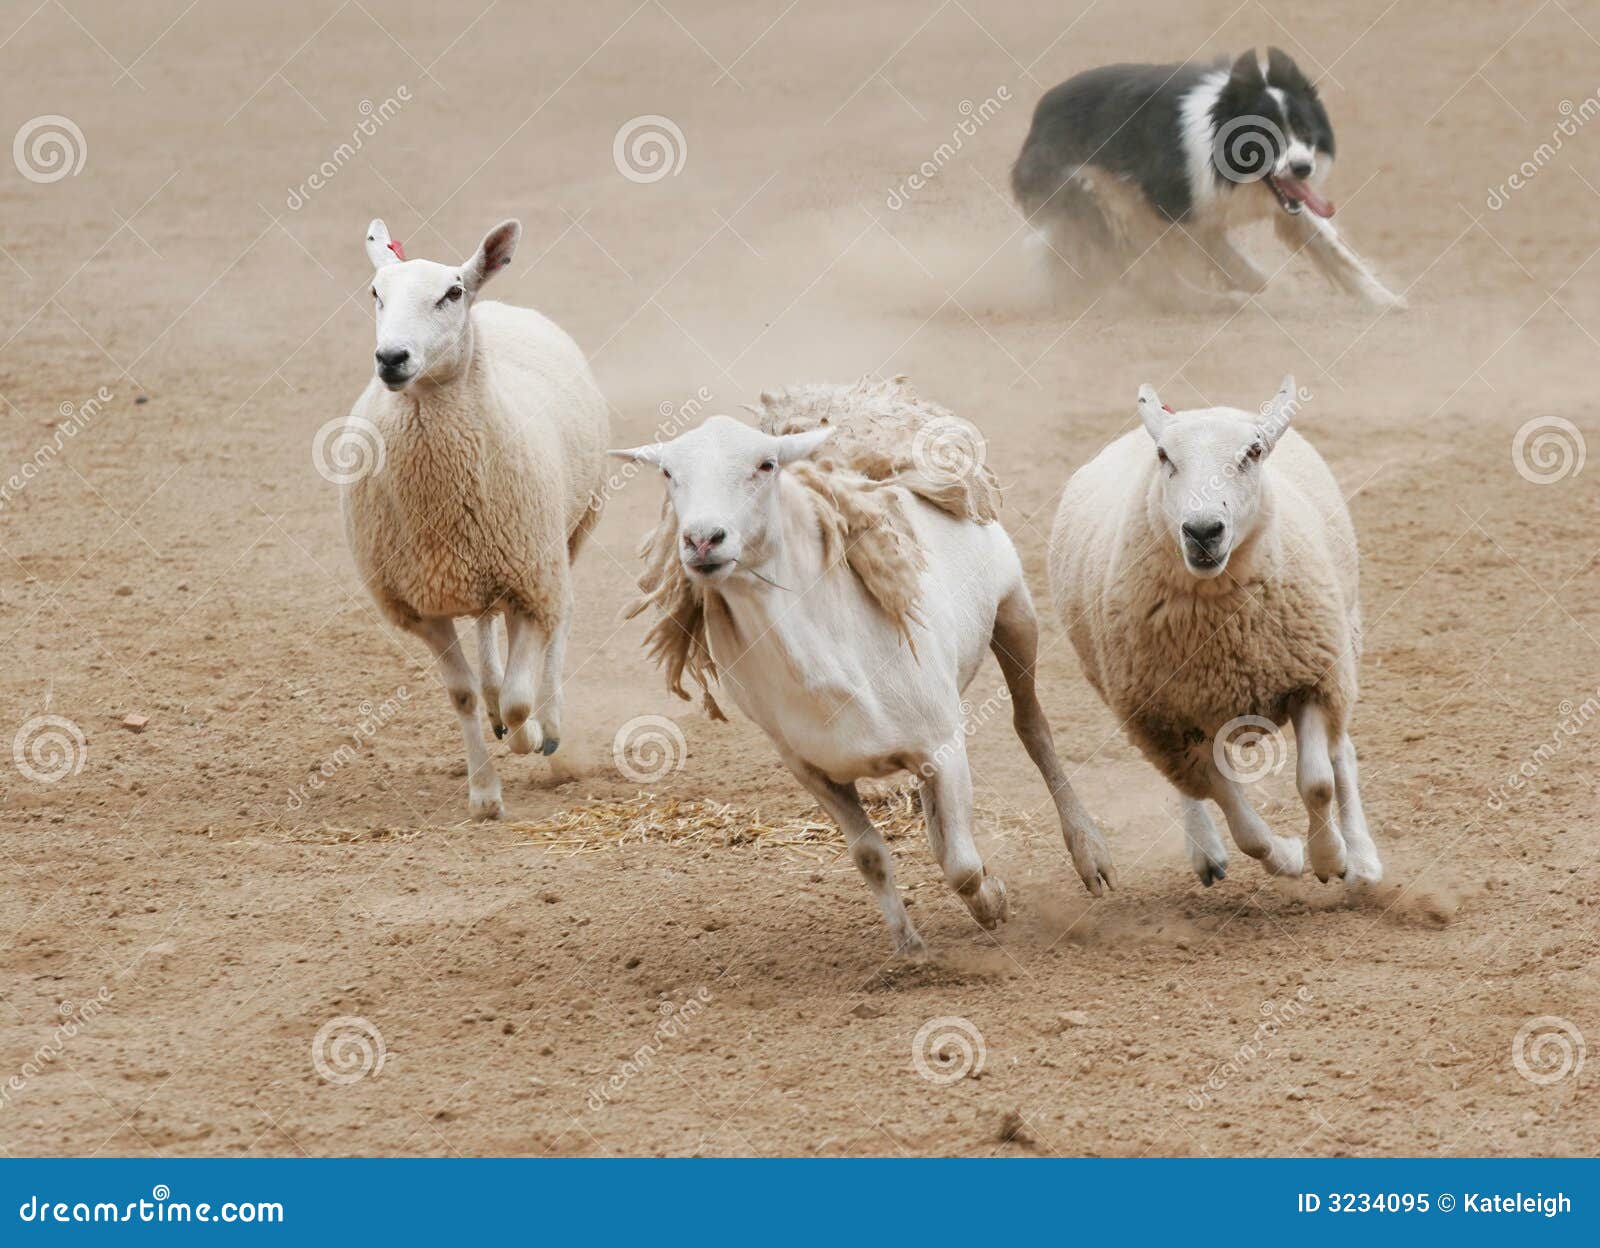 chasing sheep